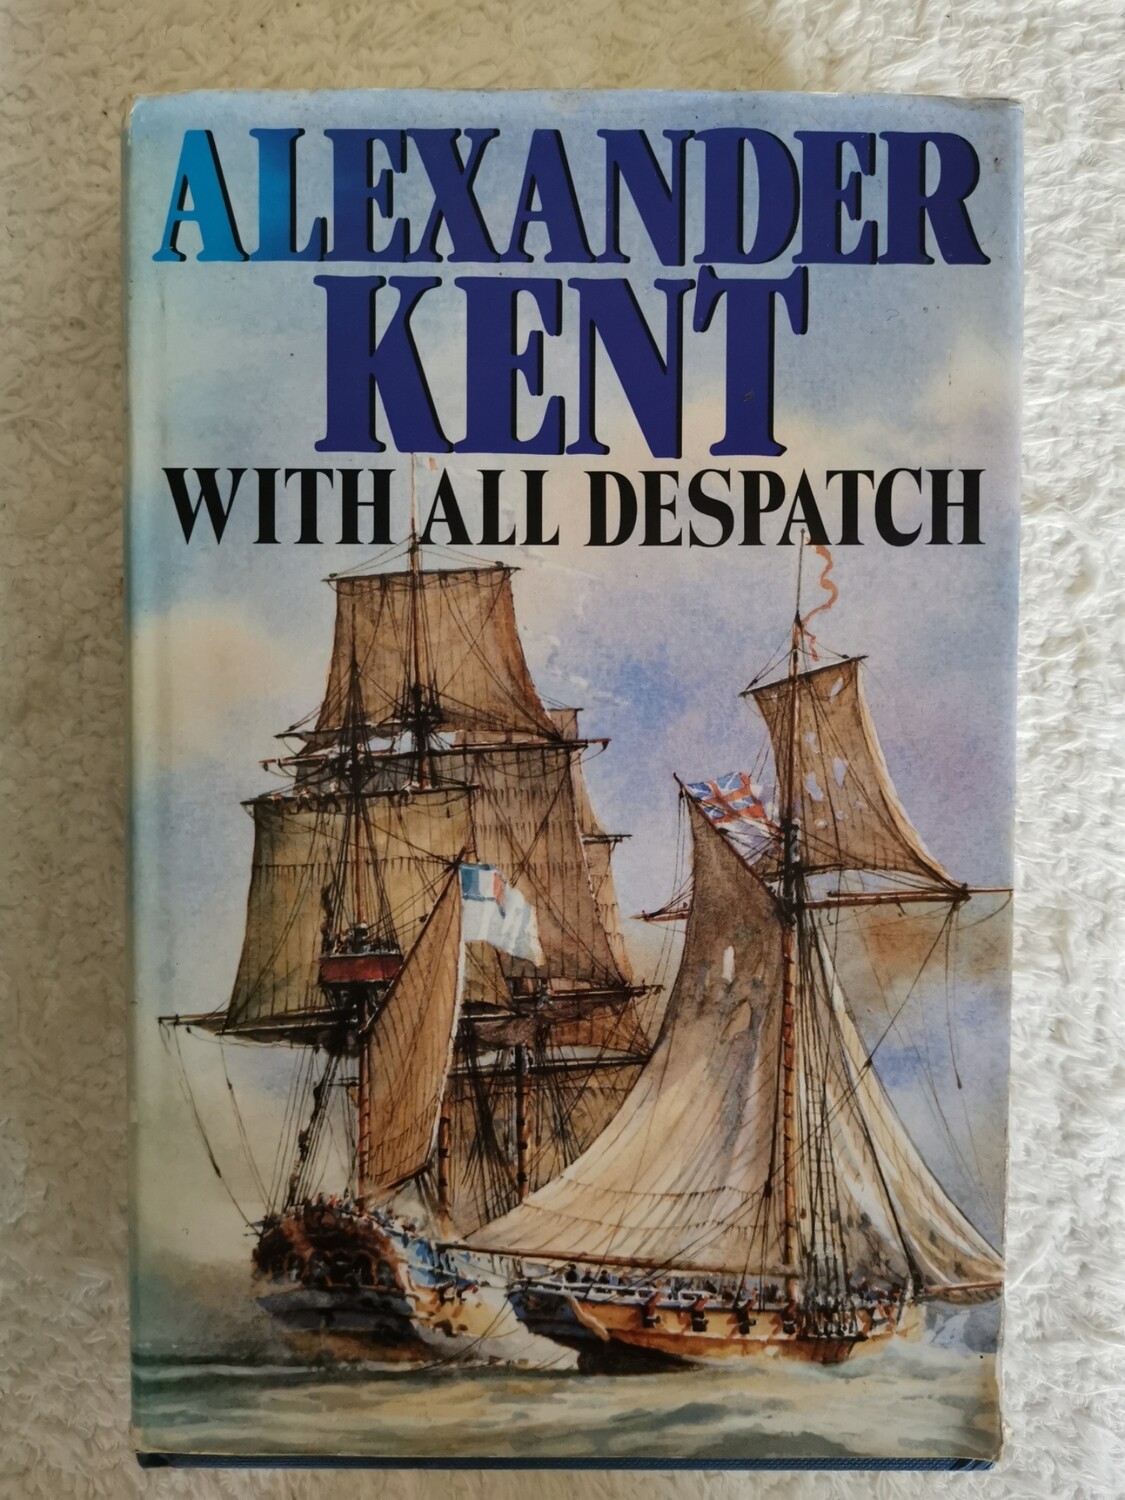 With all despatch, Alexander Kent